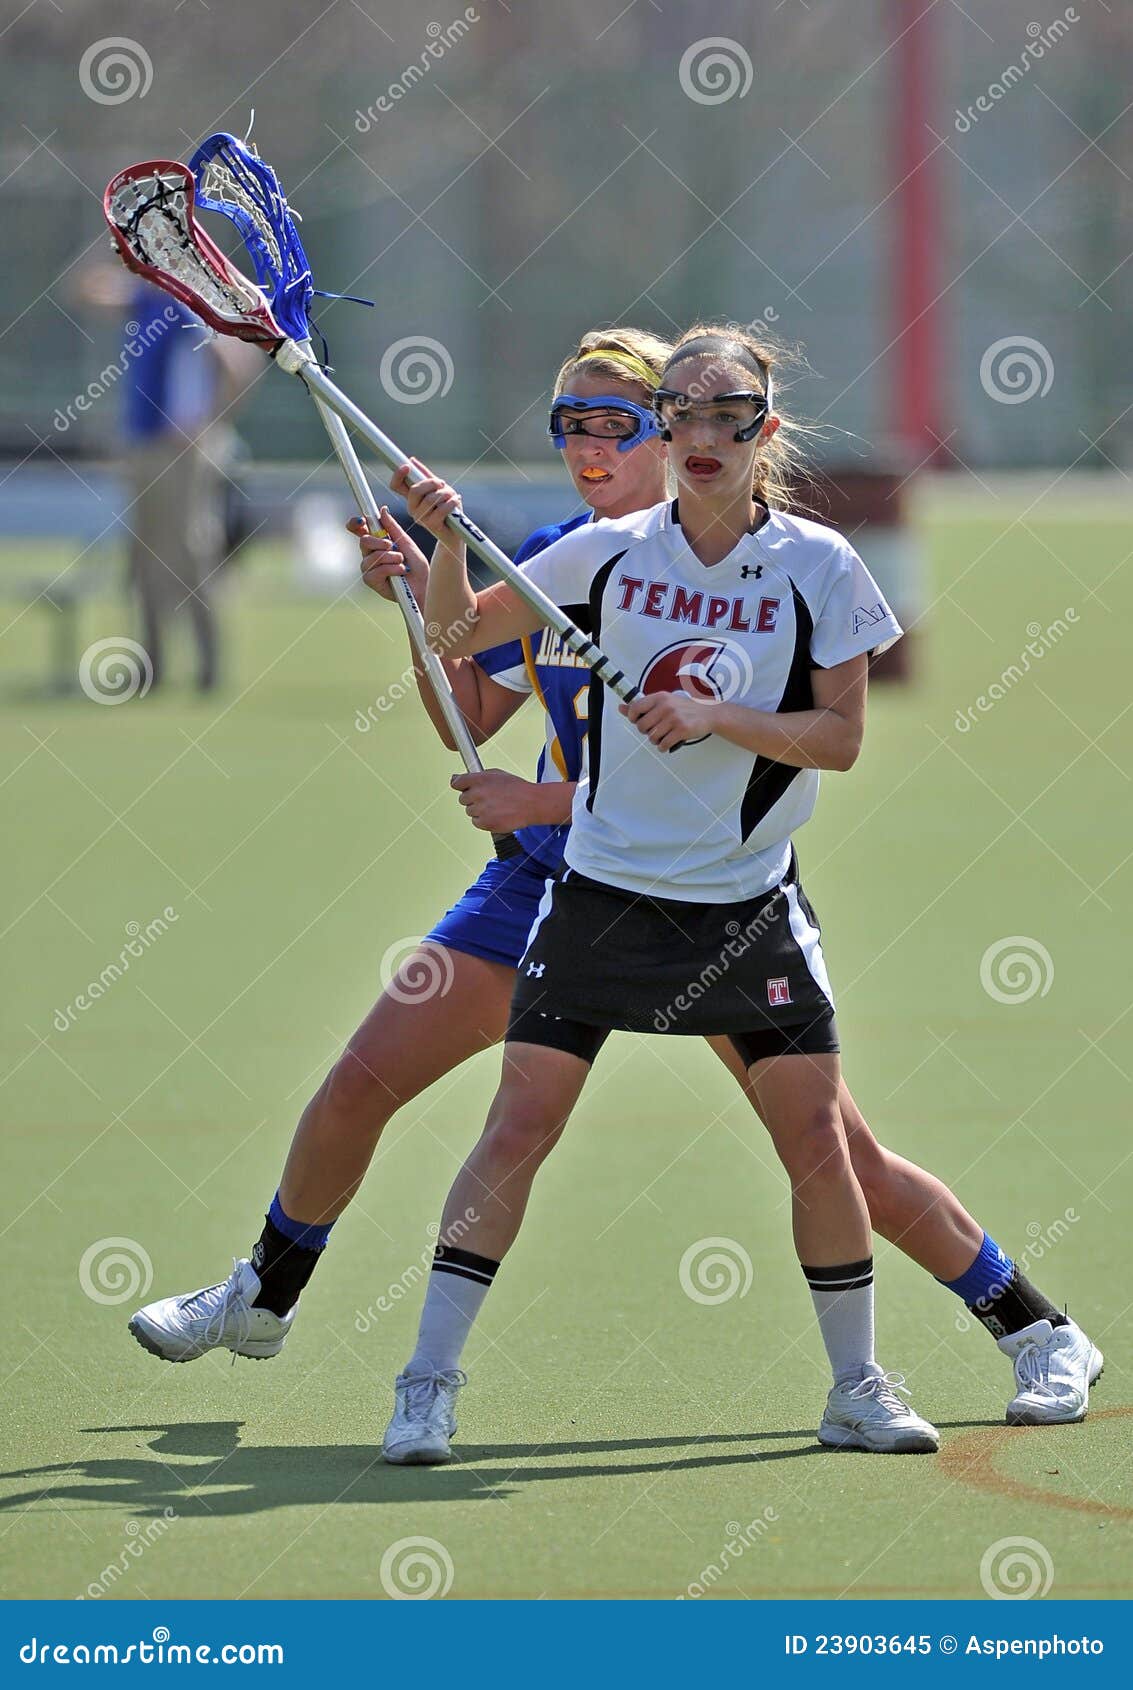 NCAA Women S Lacrosse (LAX) Editorial Image Image of defense, stick